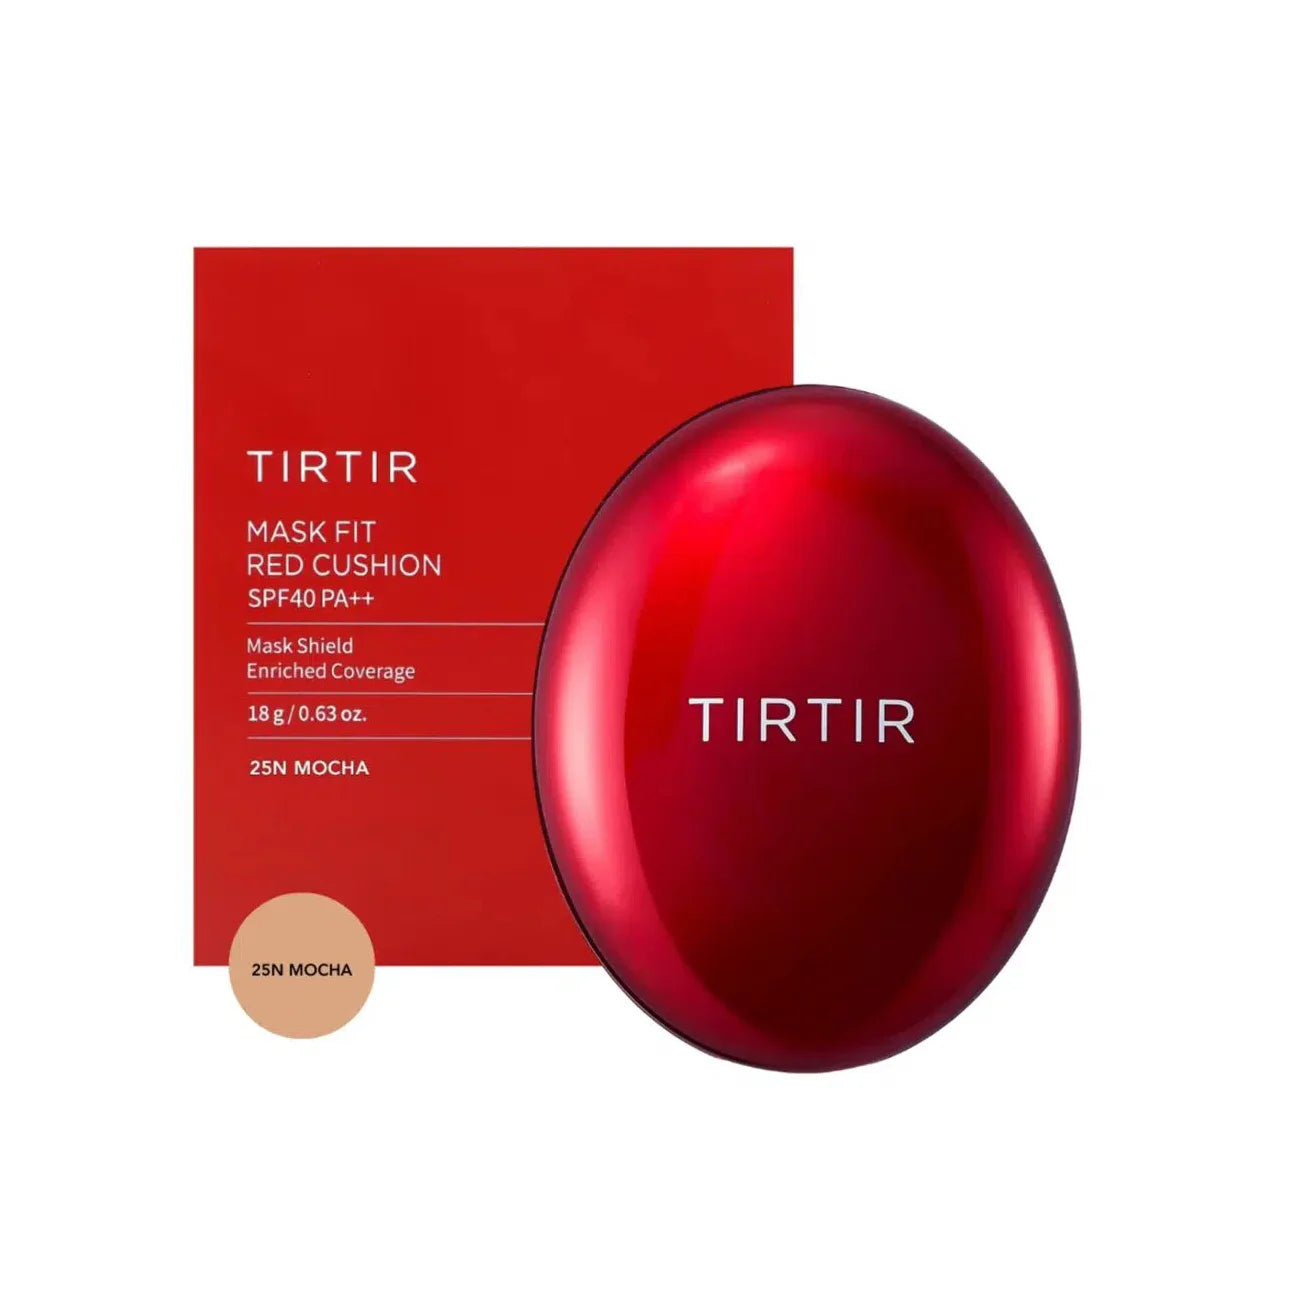 TIRTIR Mask Fit Red Cushion 25N Mocha dark skin makeup foundation full coverage with SPF 40++ Korean cosmetics K Beauty World